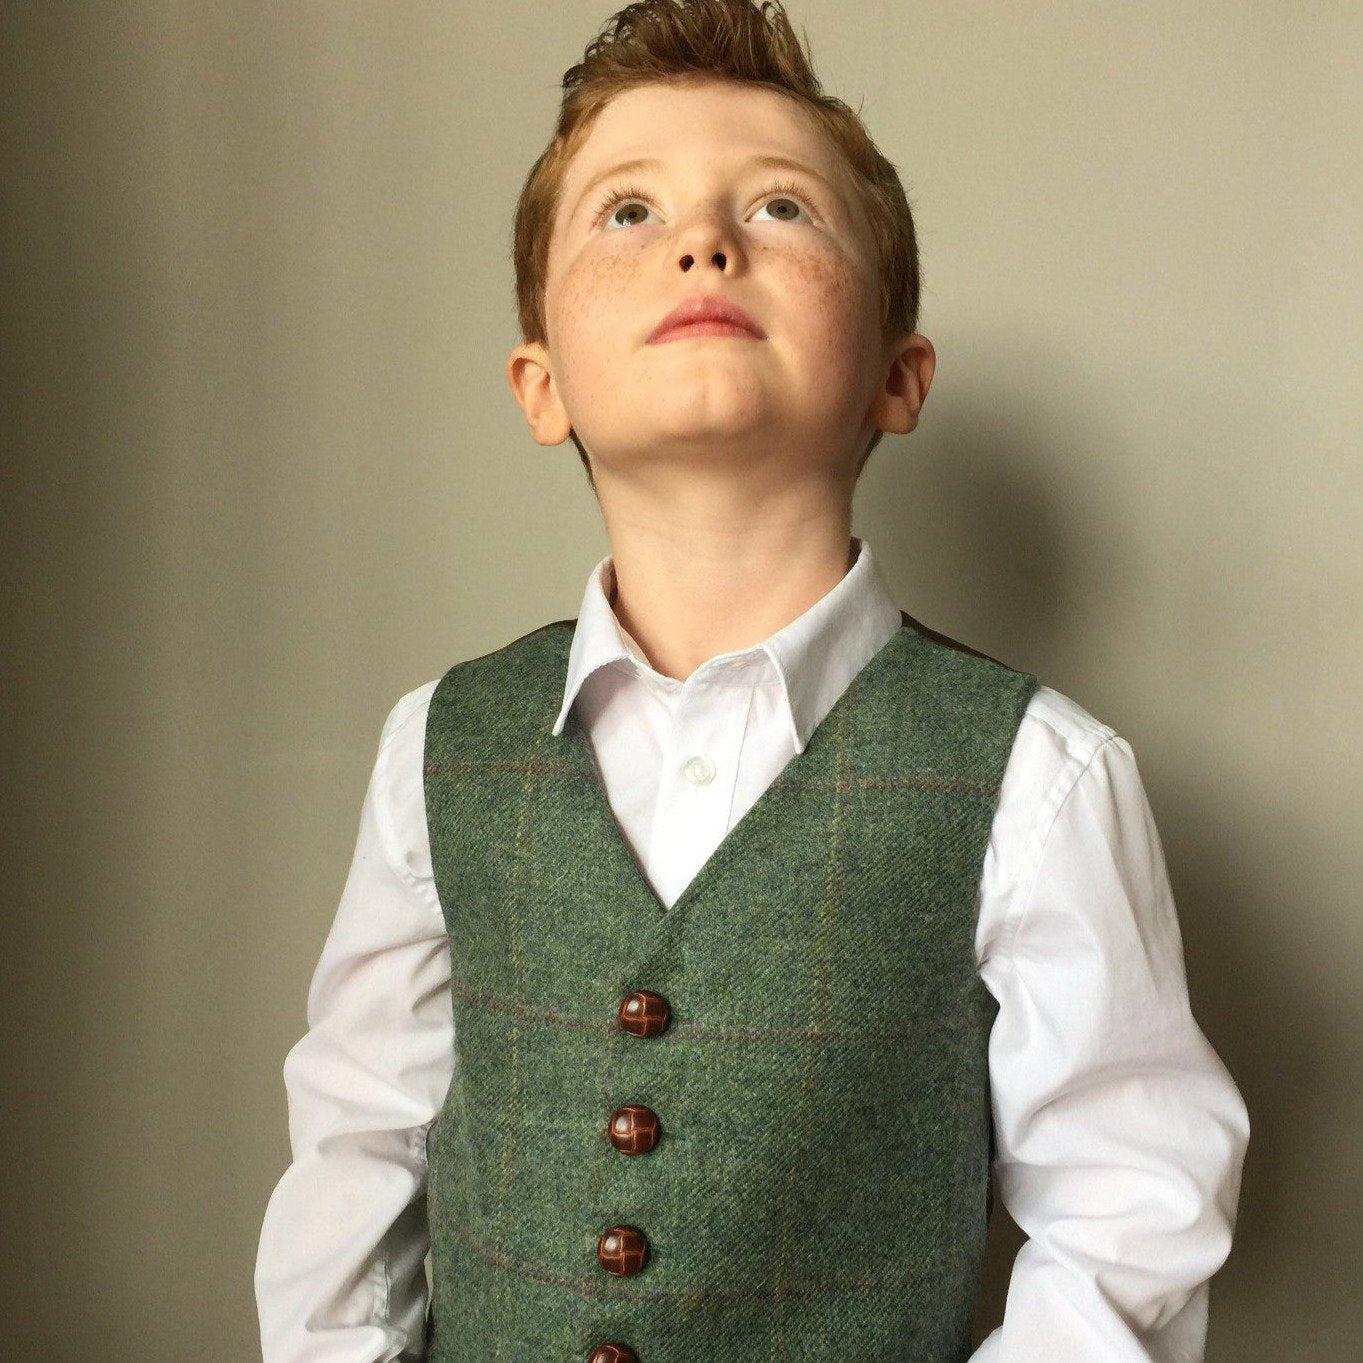 Boys waistcoat, British Tweed waistcoat, pageboy outfit, boys clothing, green check waistcoat - Henry Talbot